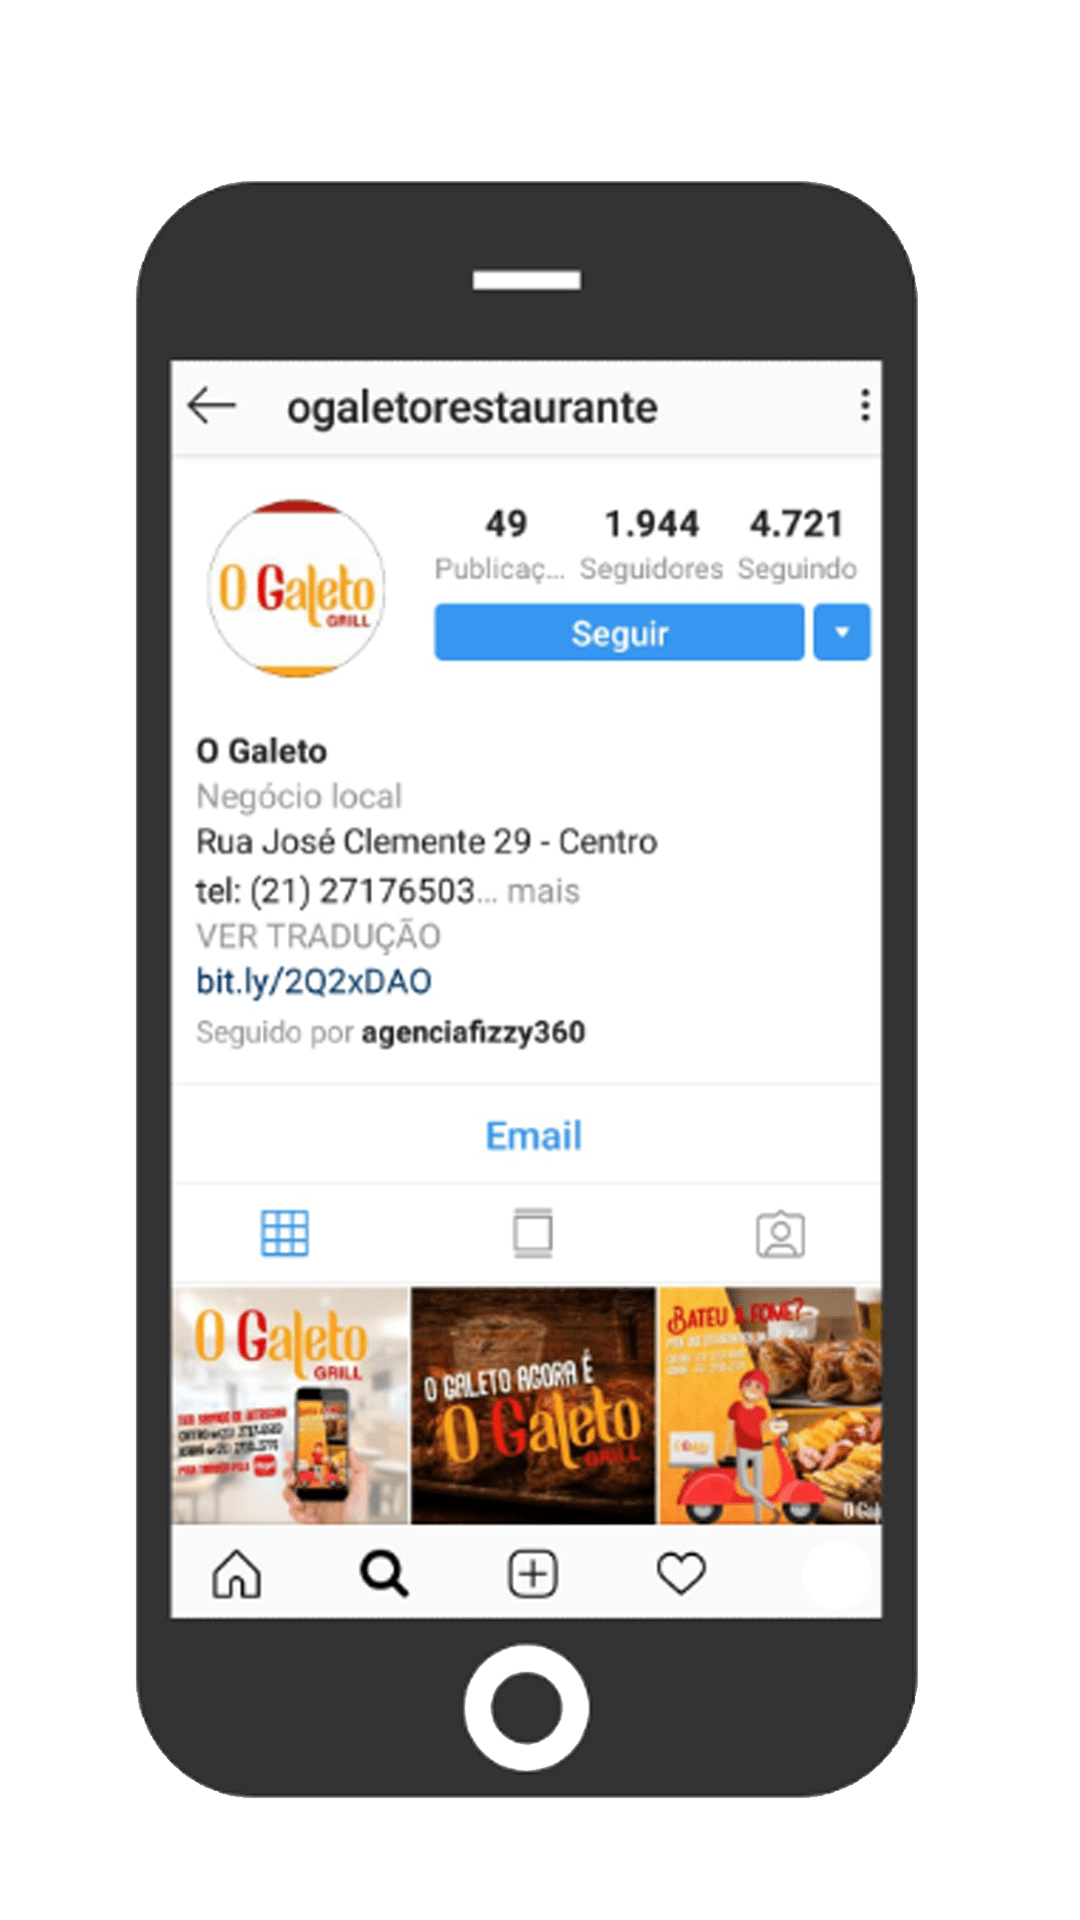 Instagram O Galeto Grill